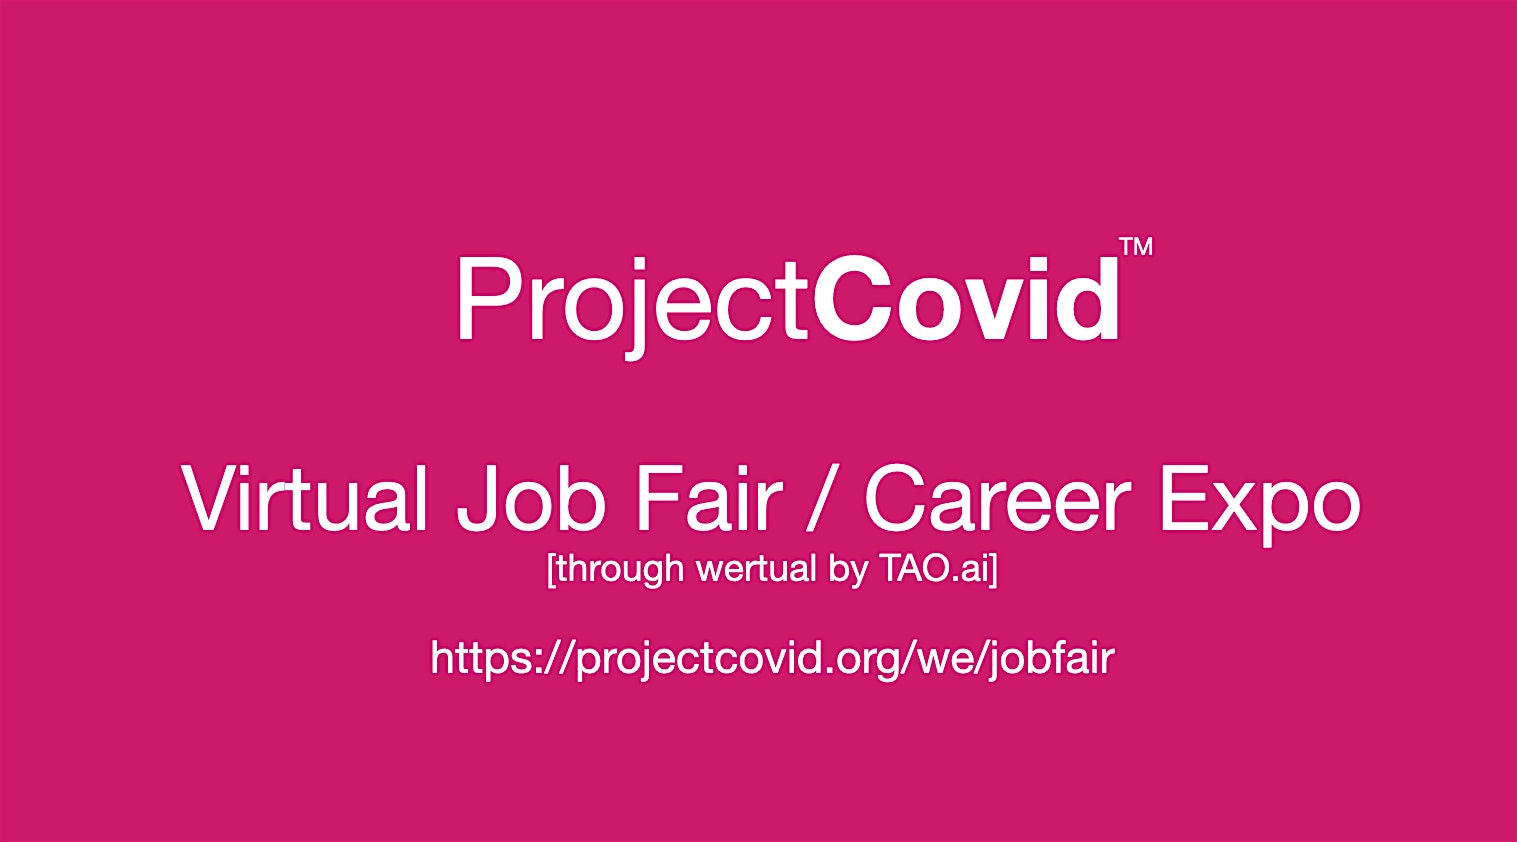 ProjectCovid Virtual Job Fair  Career Expo Event Boston